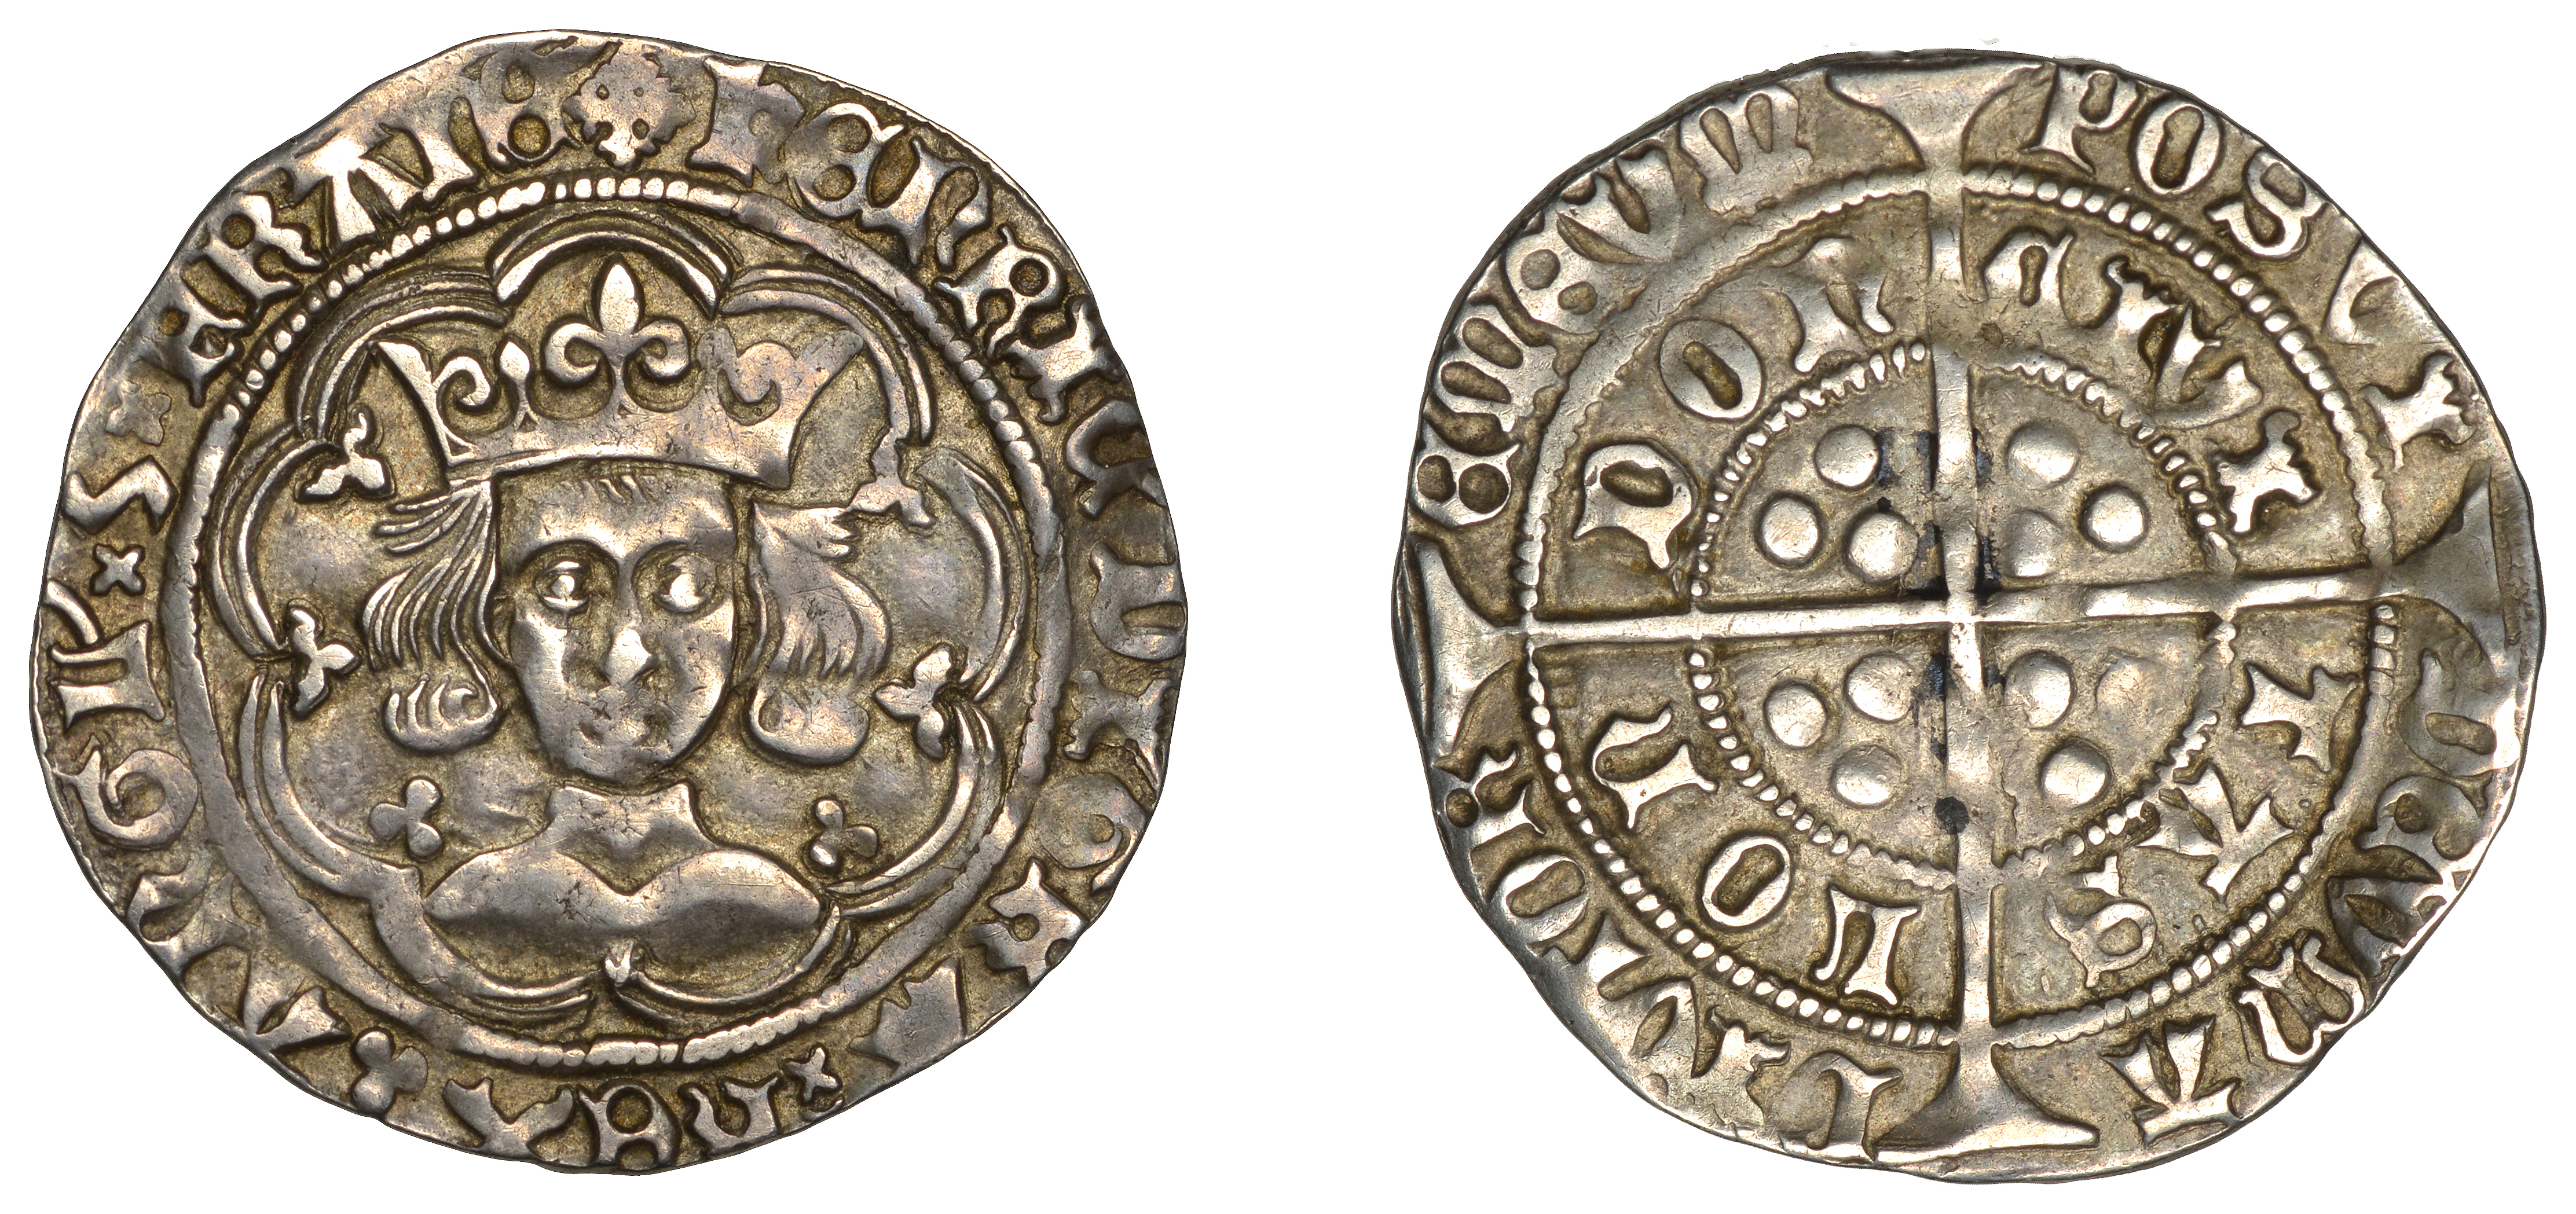 Henry VI (First reign, 1422-1461), Trefoil issue, Groat, class C, London, mm. cross IIIb on...